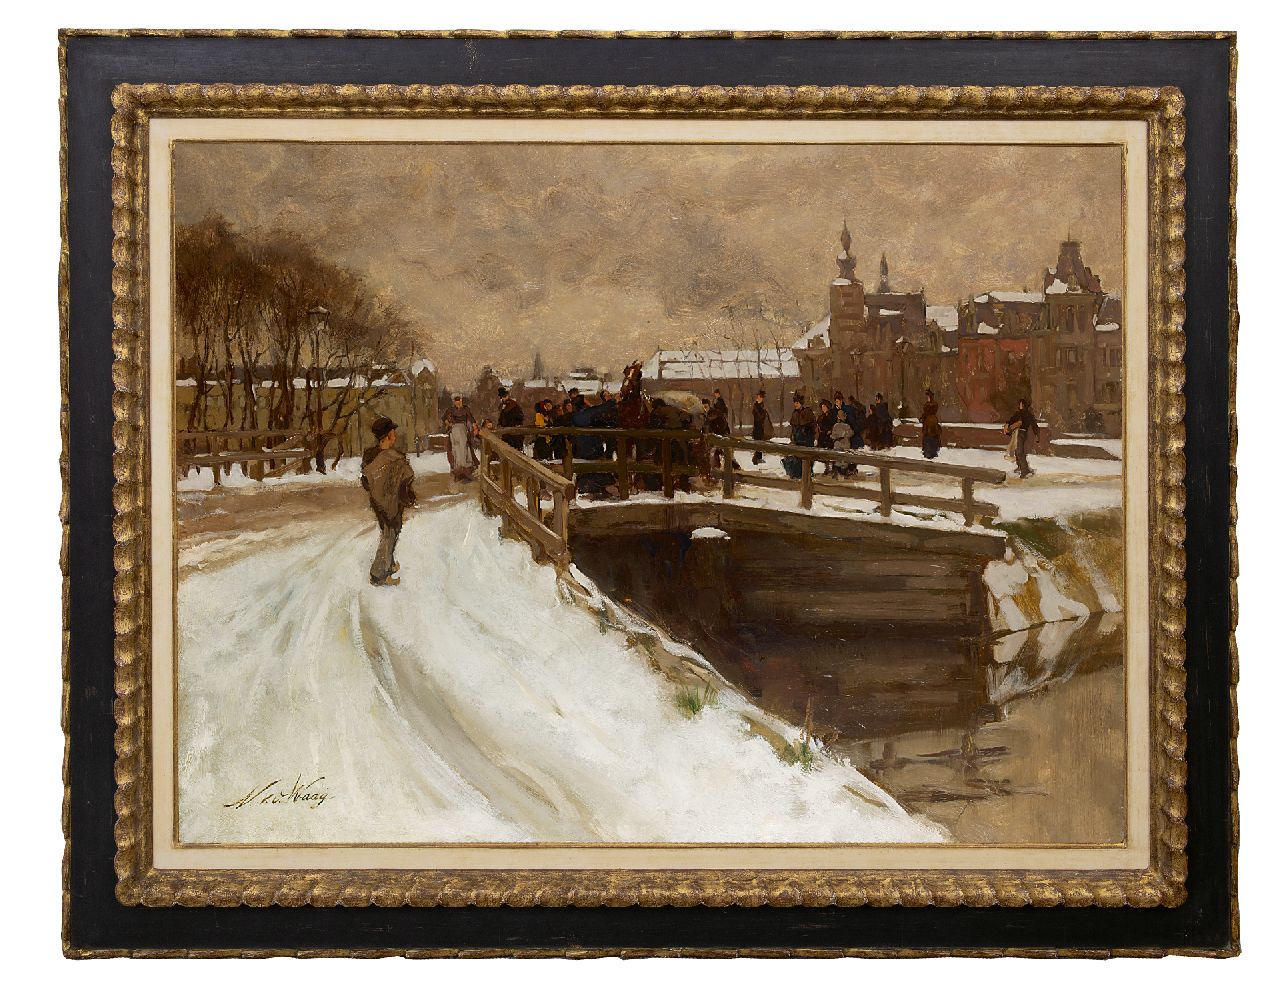 Waay N. van der | Nicolaas van der Waay | Paintings offered for sale | The Stadhouderskade covered with snow, Amsterdam, oil on canvas 75.4 x 100.7 cm, signed l.l.